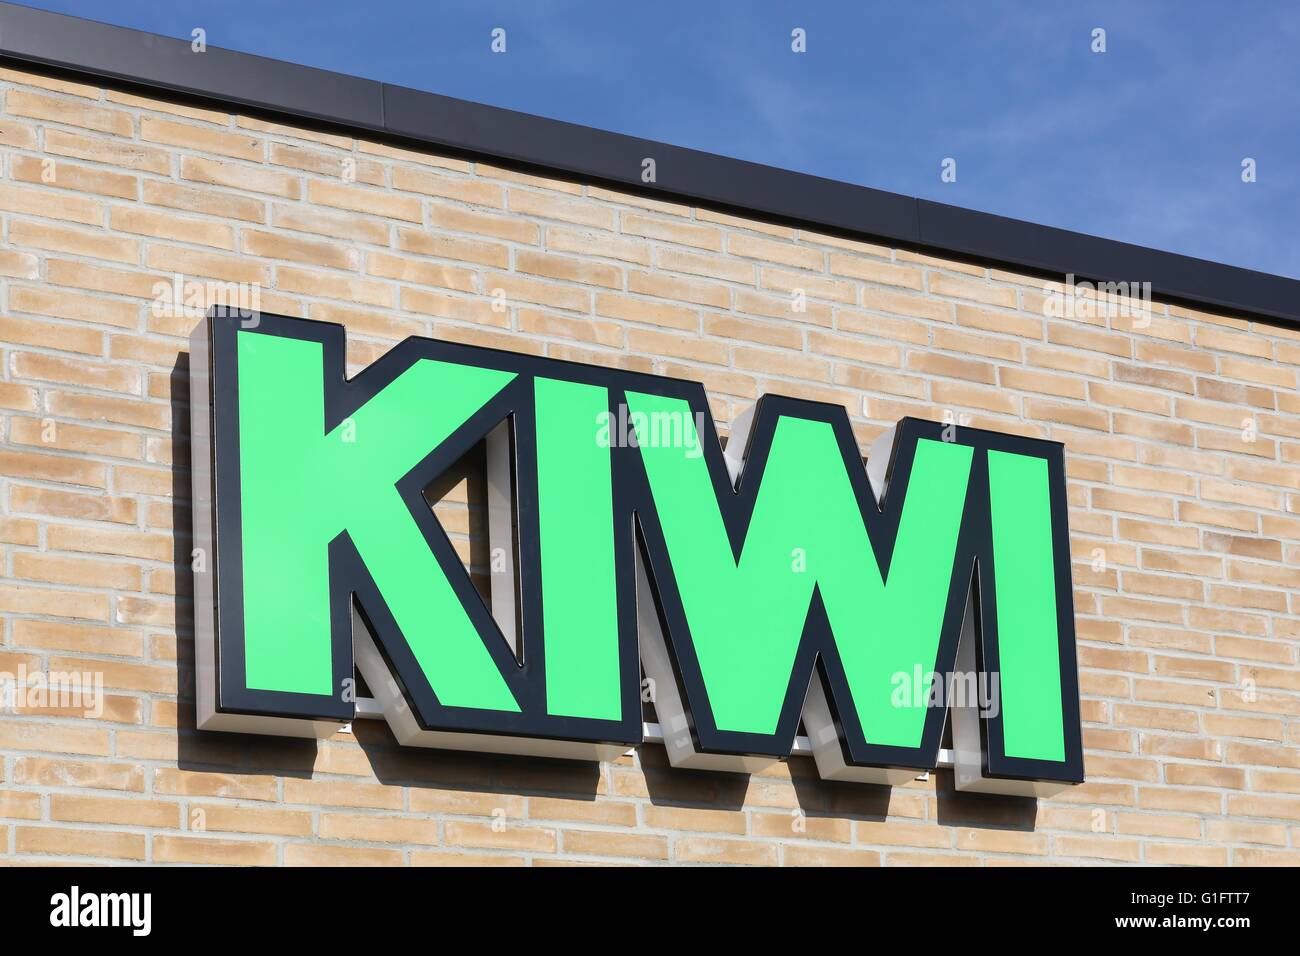 Kiwi logo on a wall Stock Photo